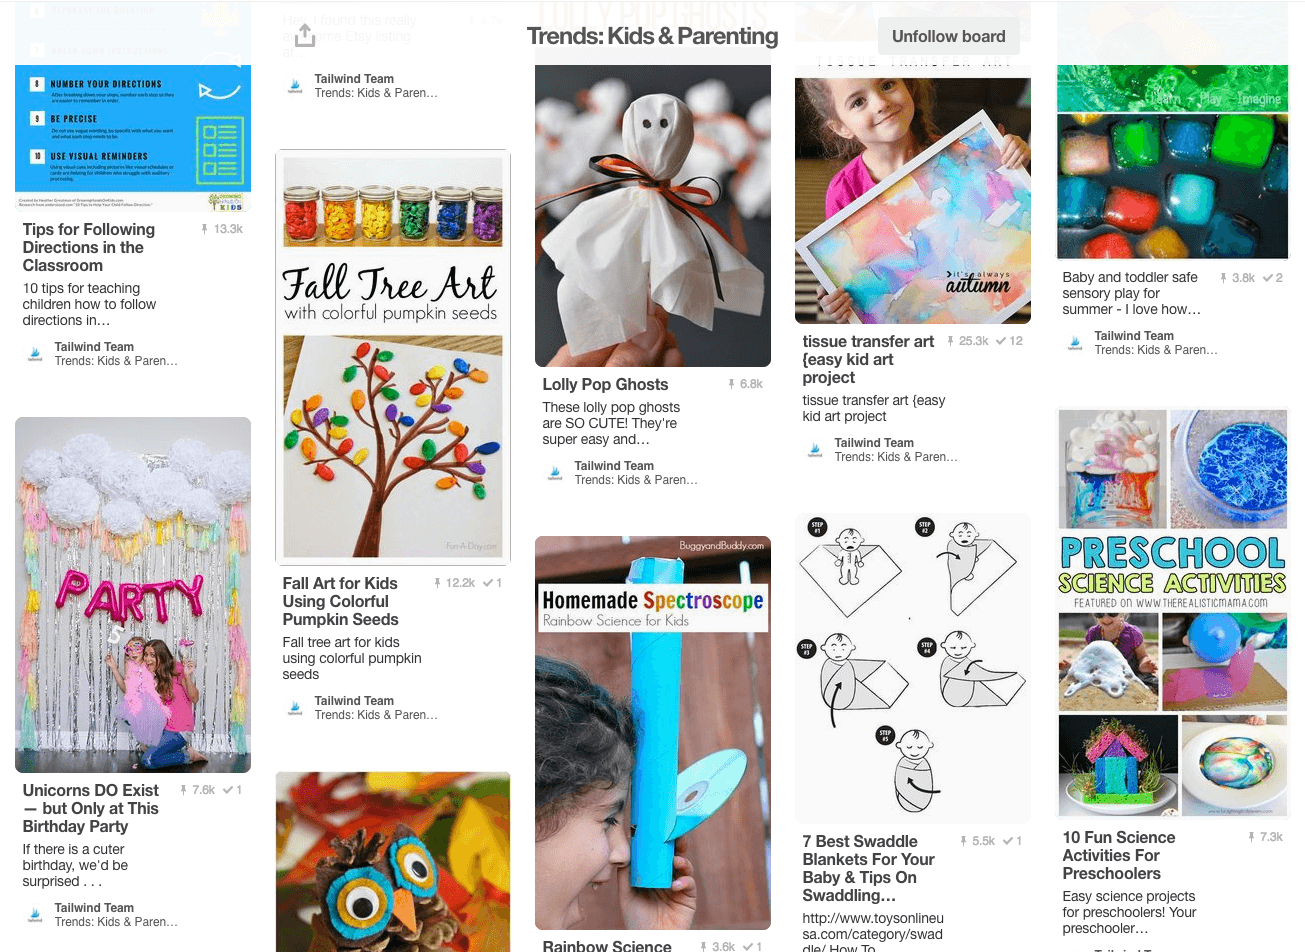 August Parenting & Kids Trends on Pinterest